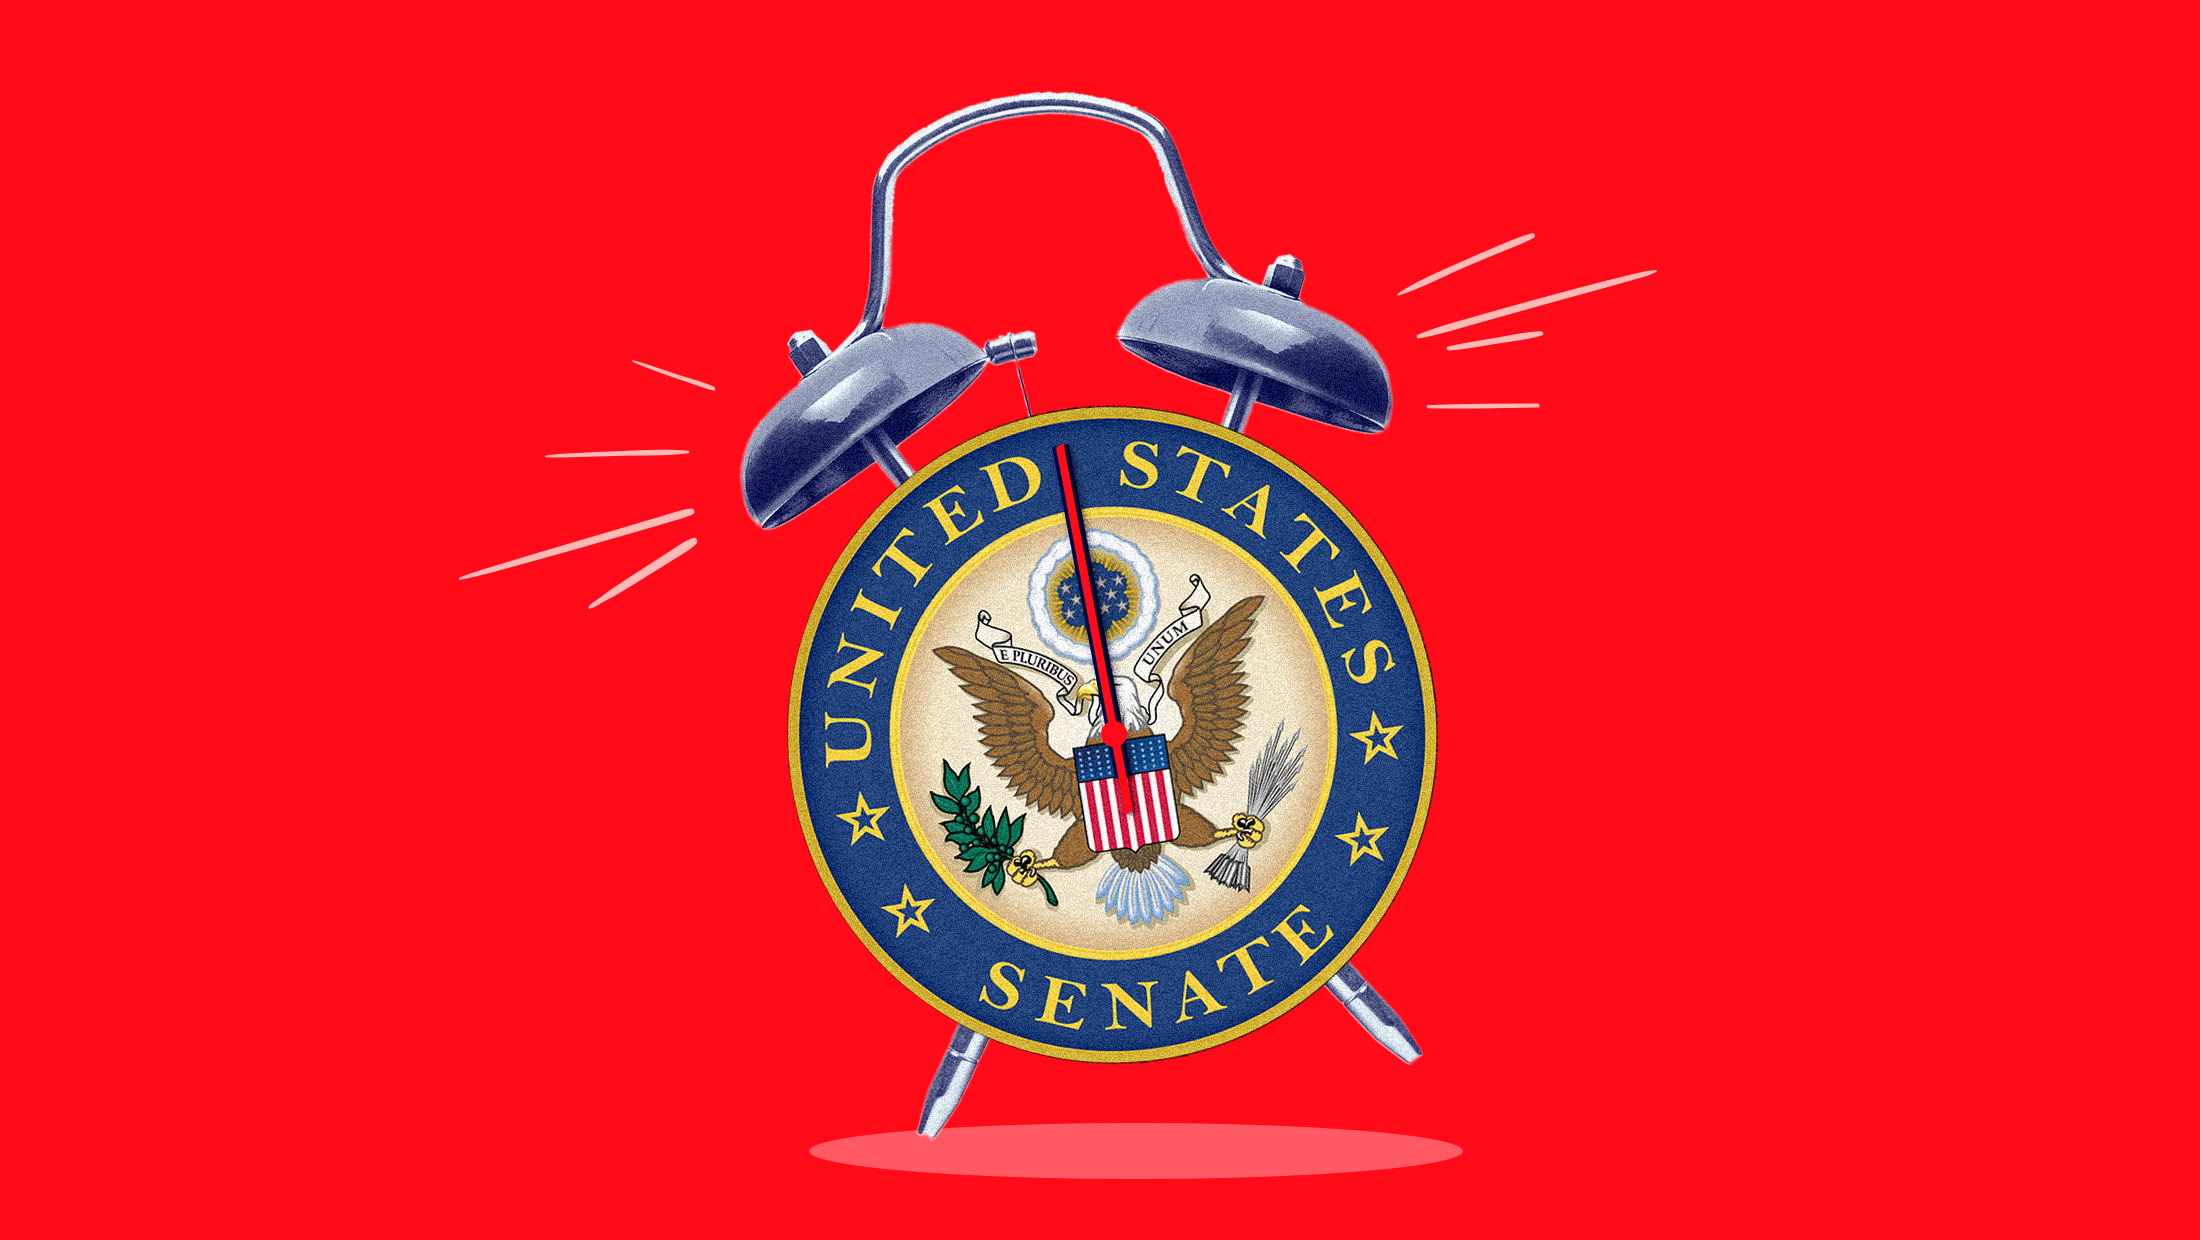 A ringing alarm clock featuring the U.S. Senate Seal